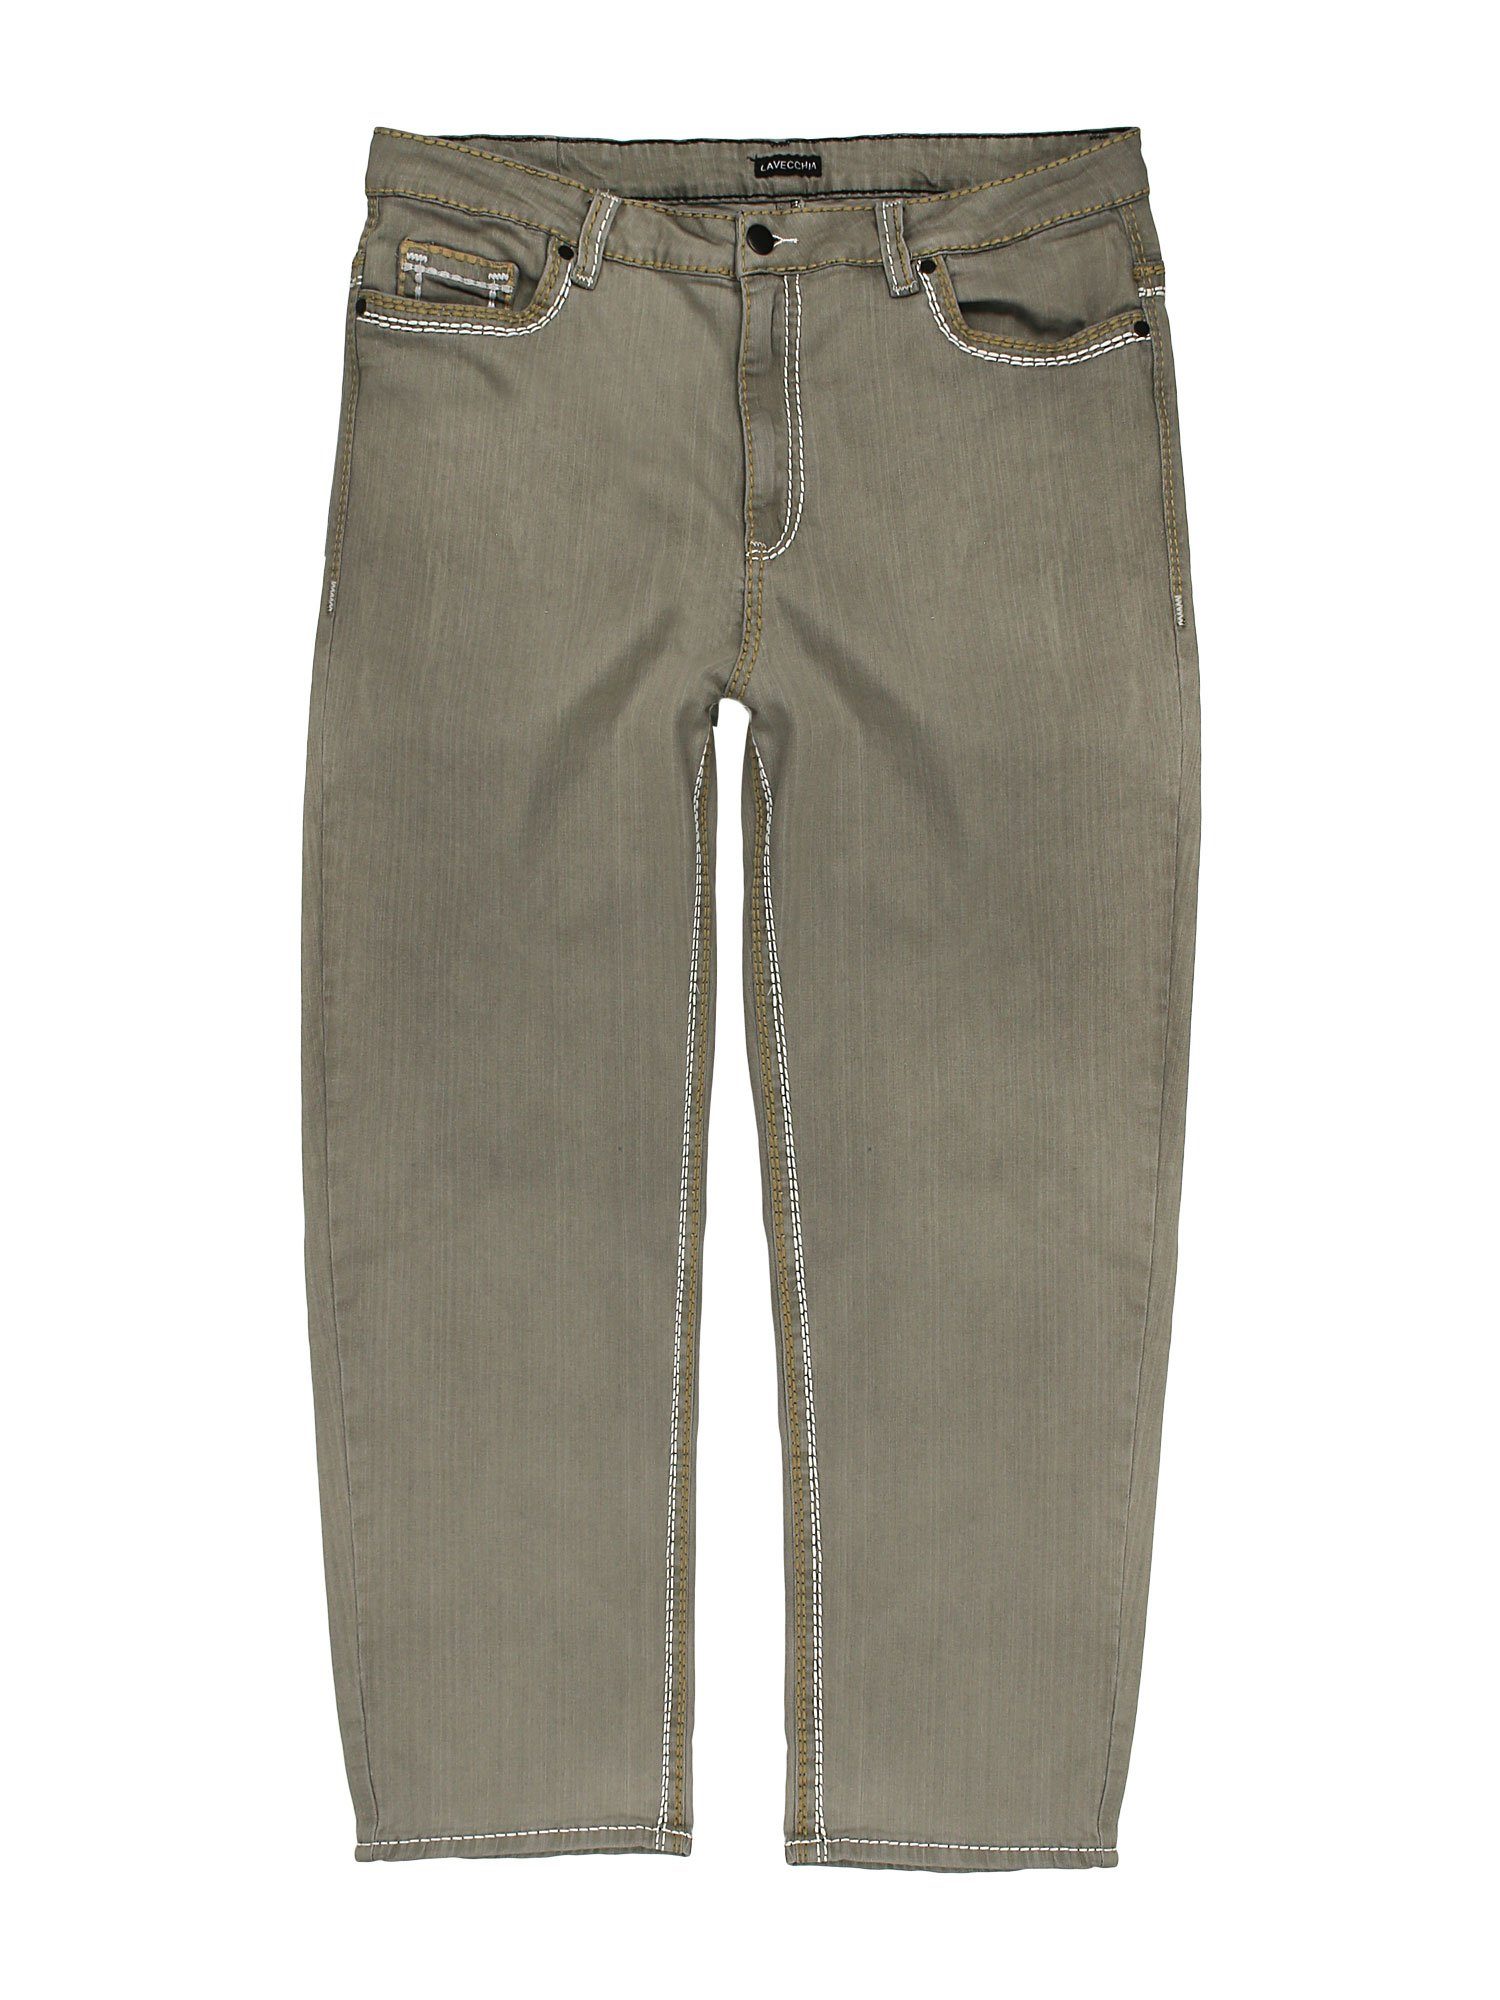 Lavecchia Comfort-fit-Jeans Übergrößen Herren Jeanshose LV-503 Stretch mit Elasthan & dicker Naht dunkelgrau